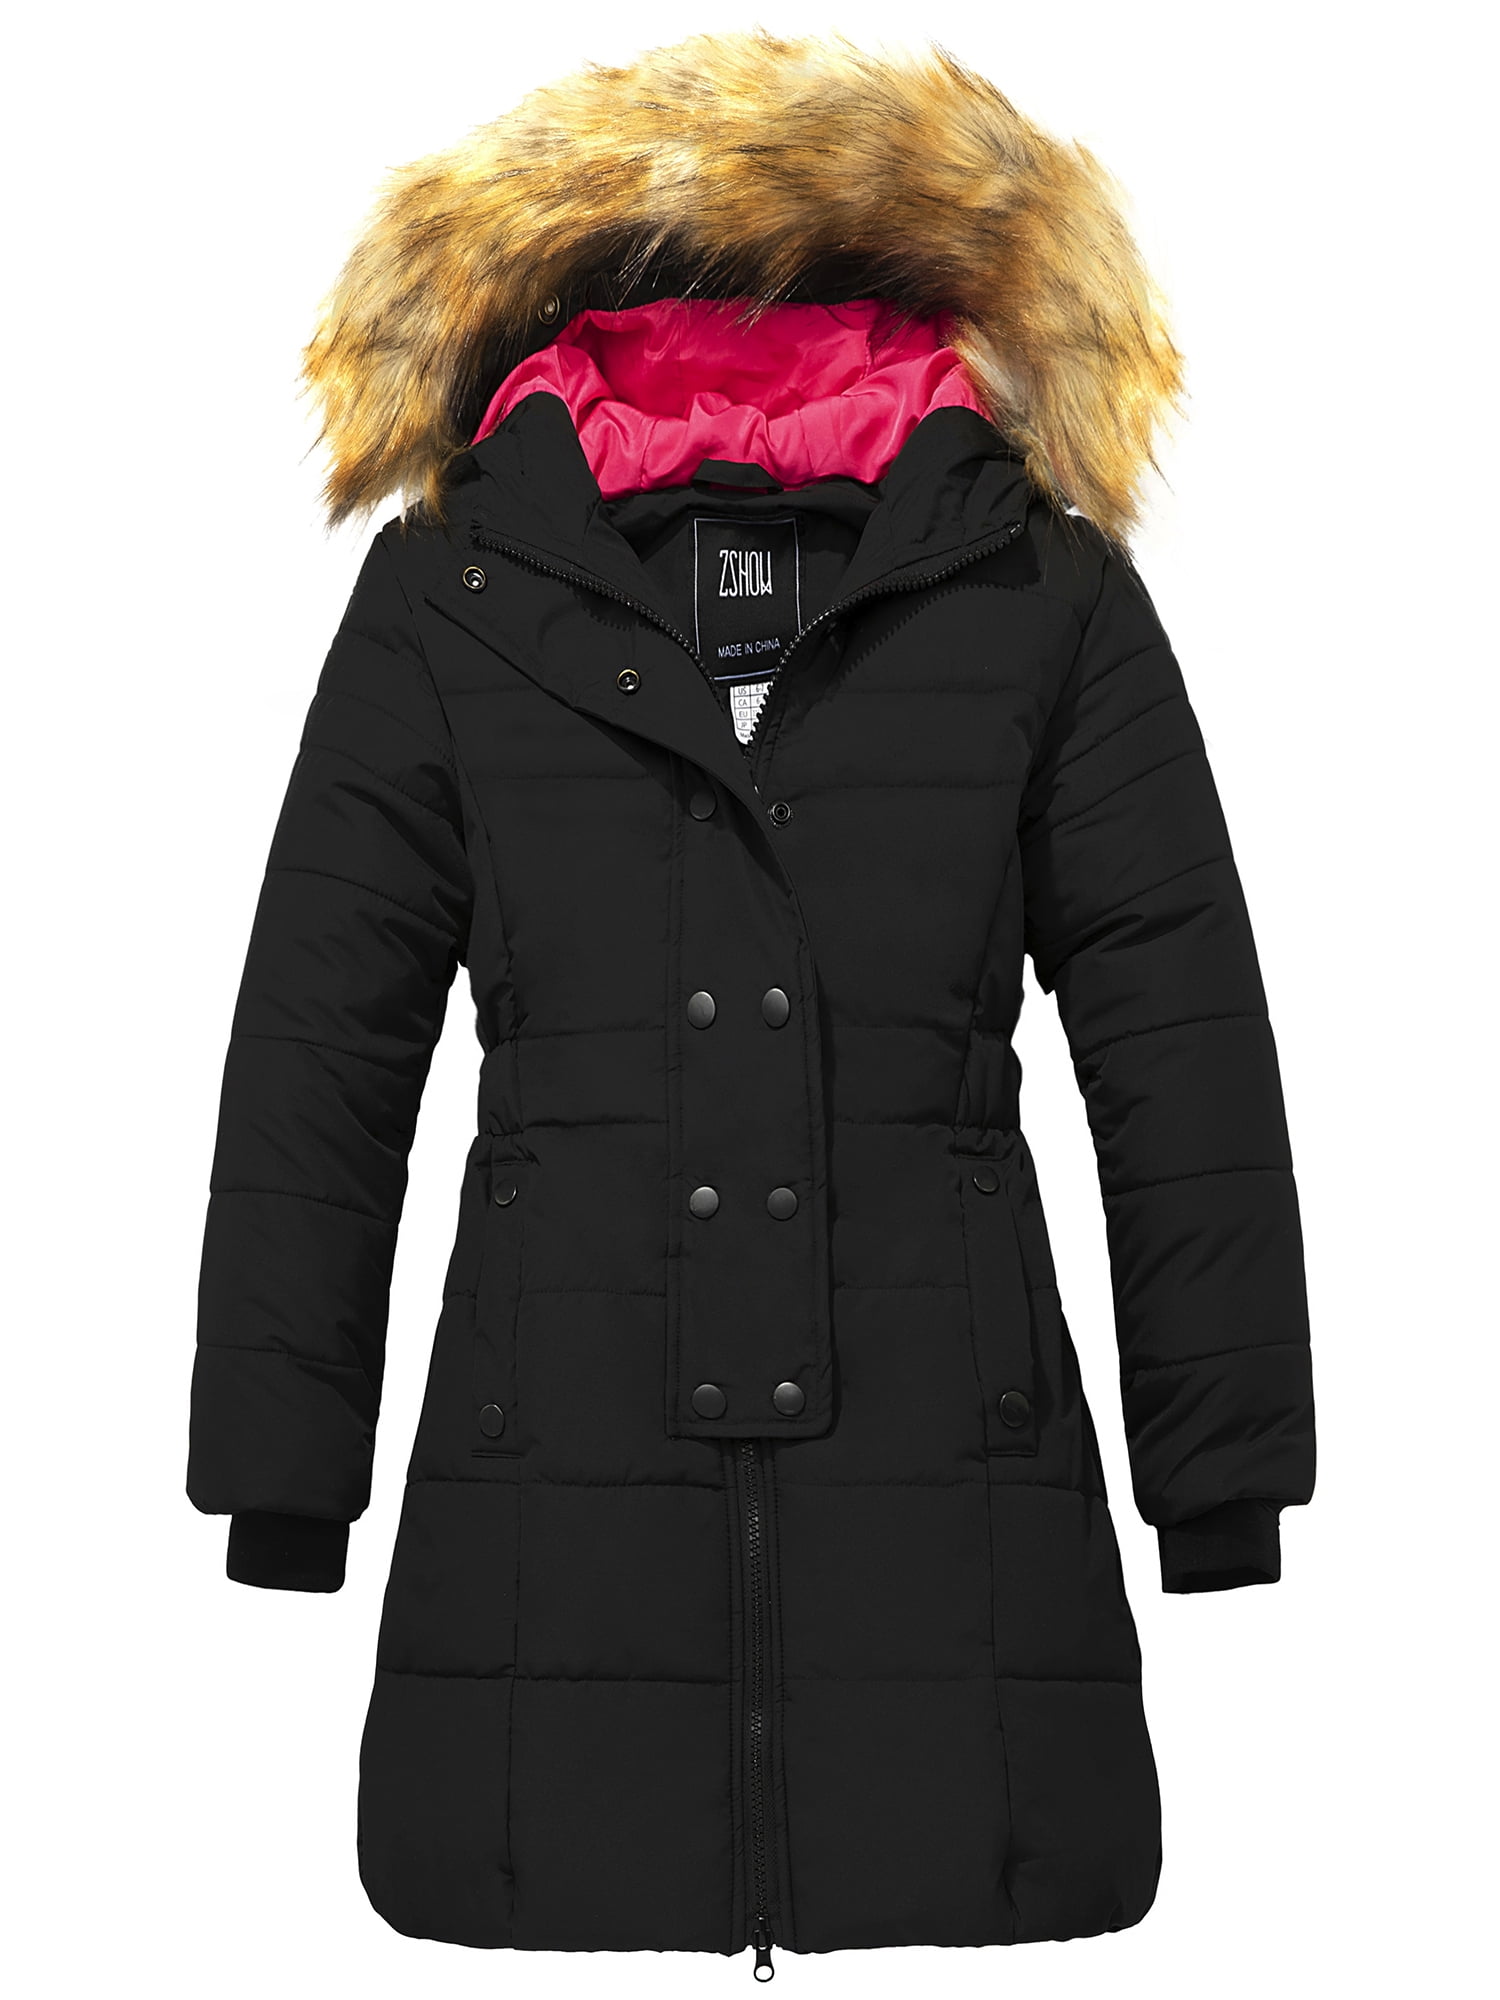 ZSHOW Girls' Puffer Jacket Water Resistant Winter Parka Coat Warm Long ...